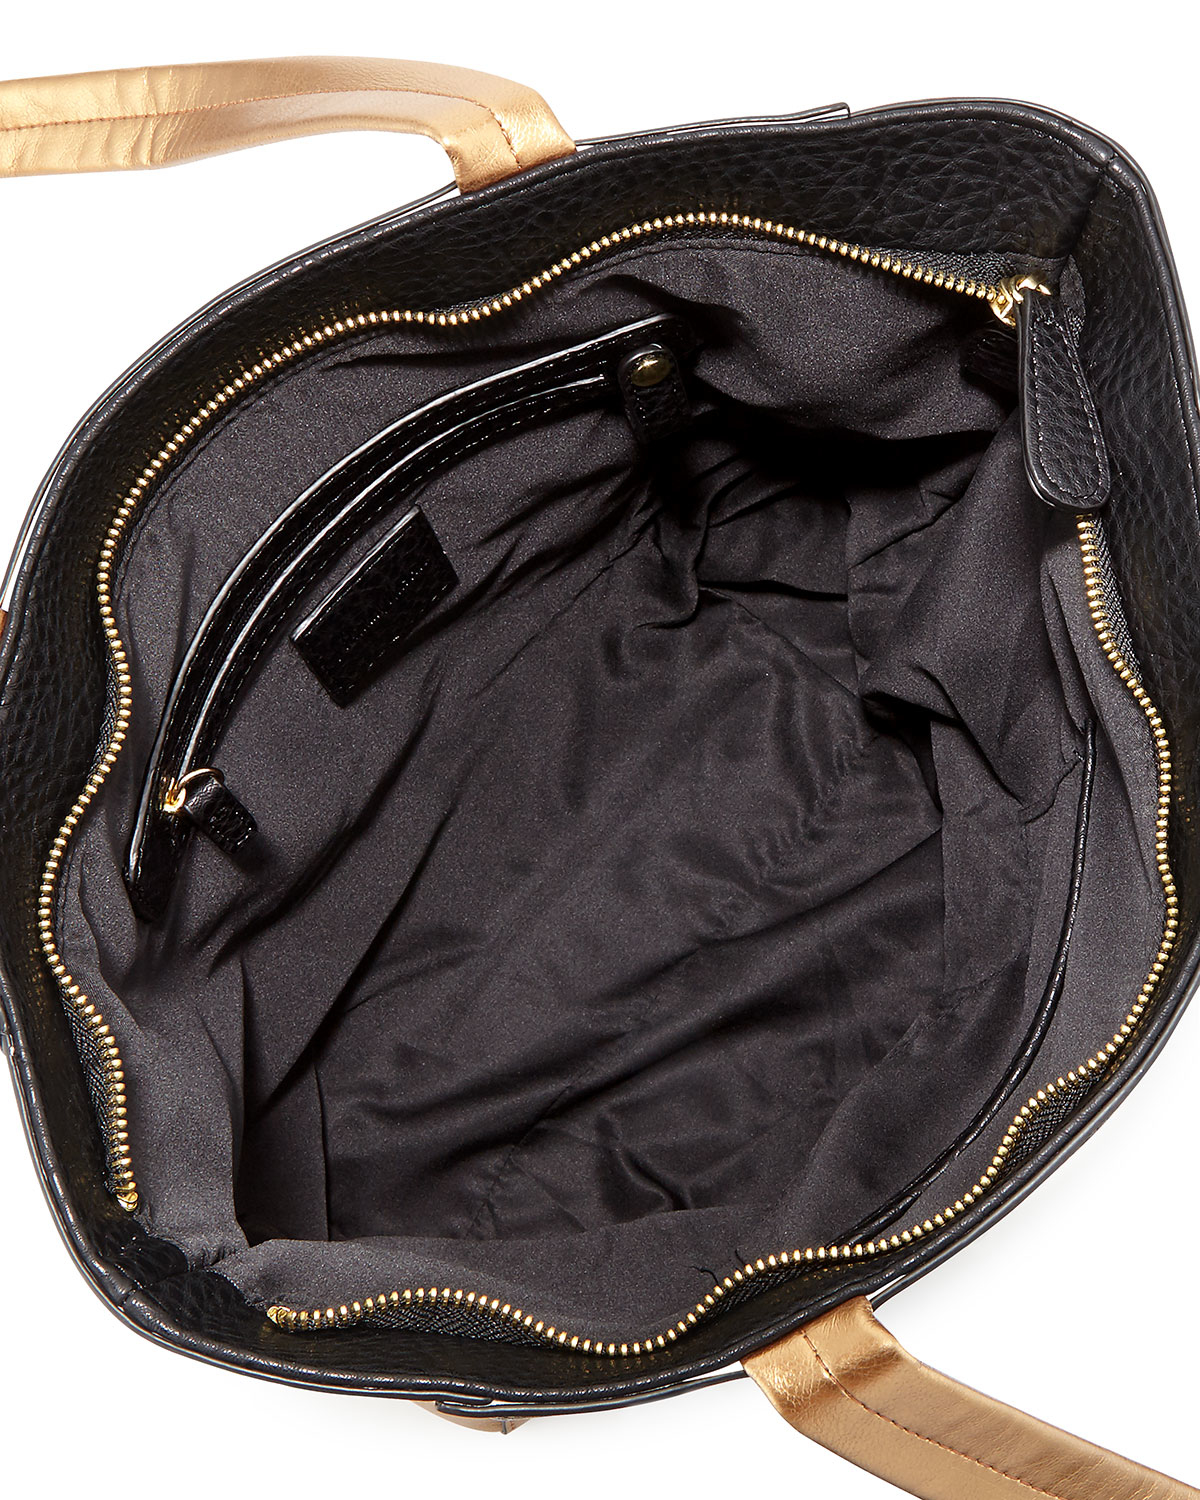 Lyst - Neiman Marcus Dylan Metallic North-south Tote Bag in Metallic